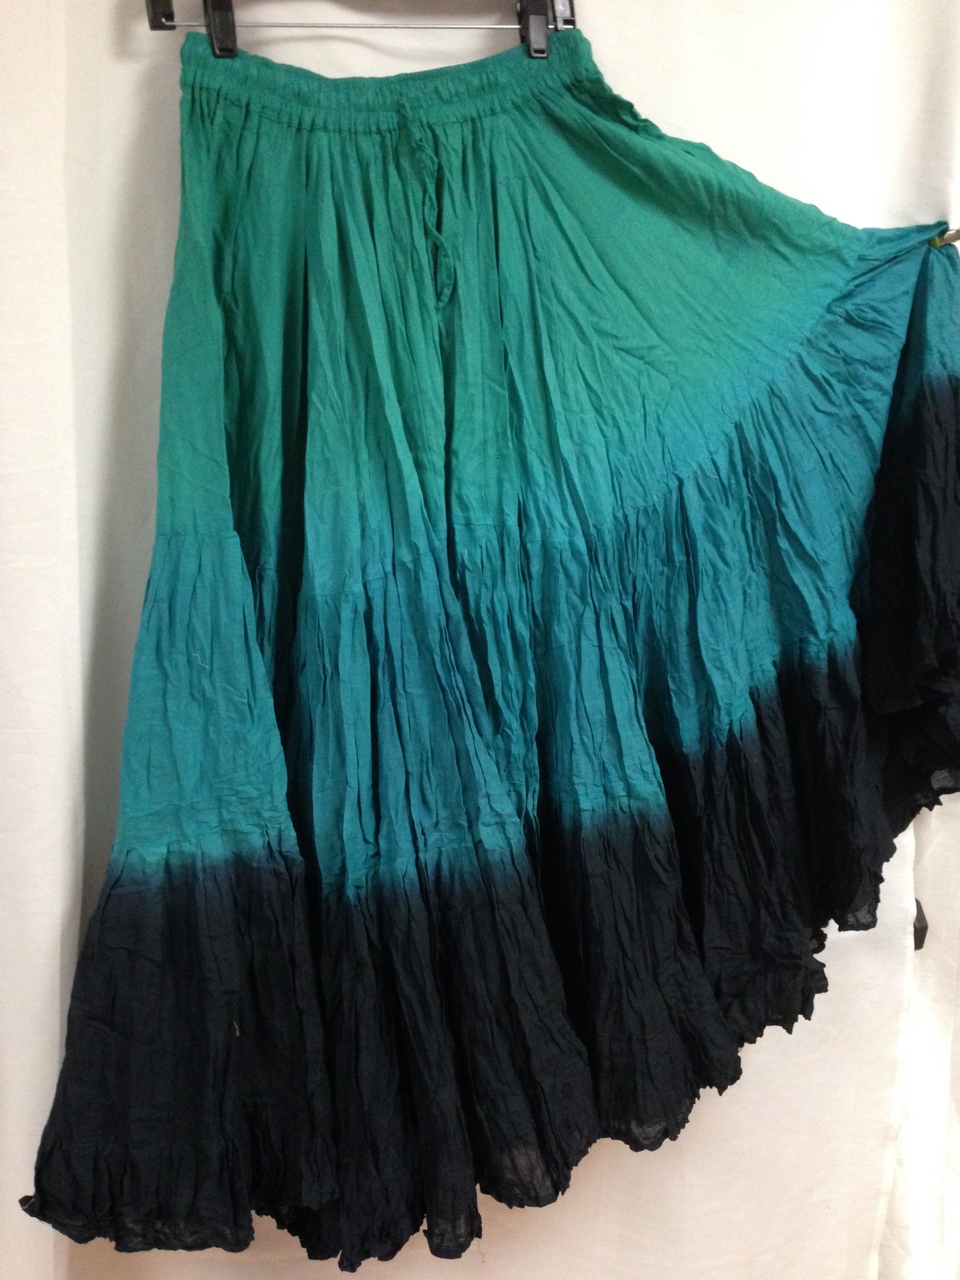 DIP DYE- 25-Yard Pure Cotton Skirts - Shaded Teal Black - Magical Fashions